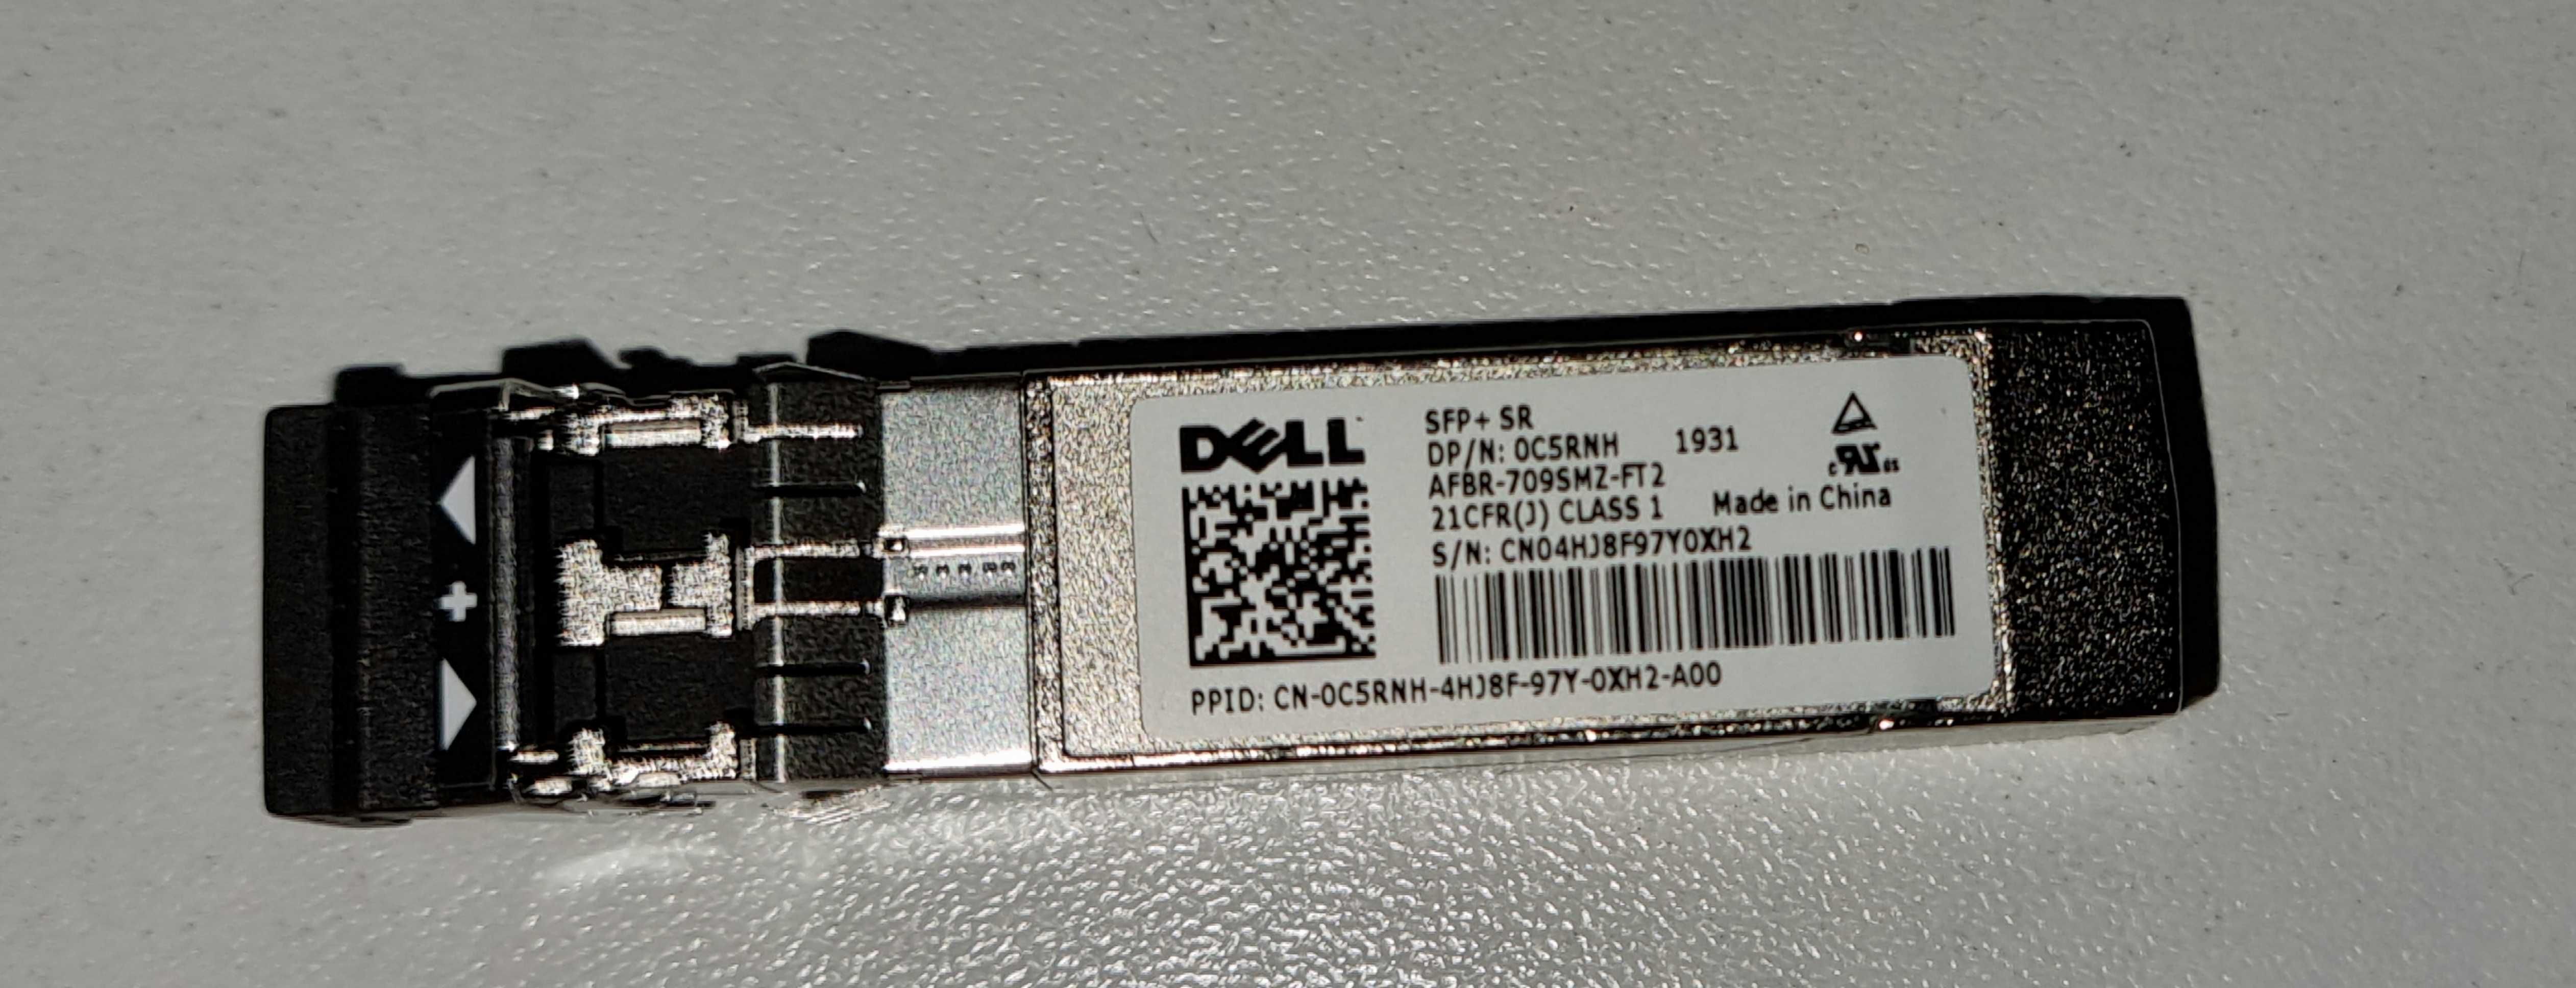 Foxconn for Dell, SFP+, SR, Optical Transceiver - C5RNH